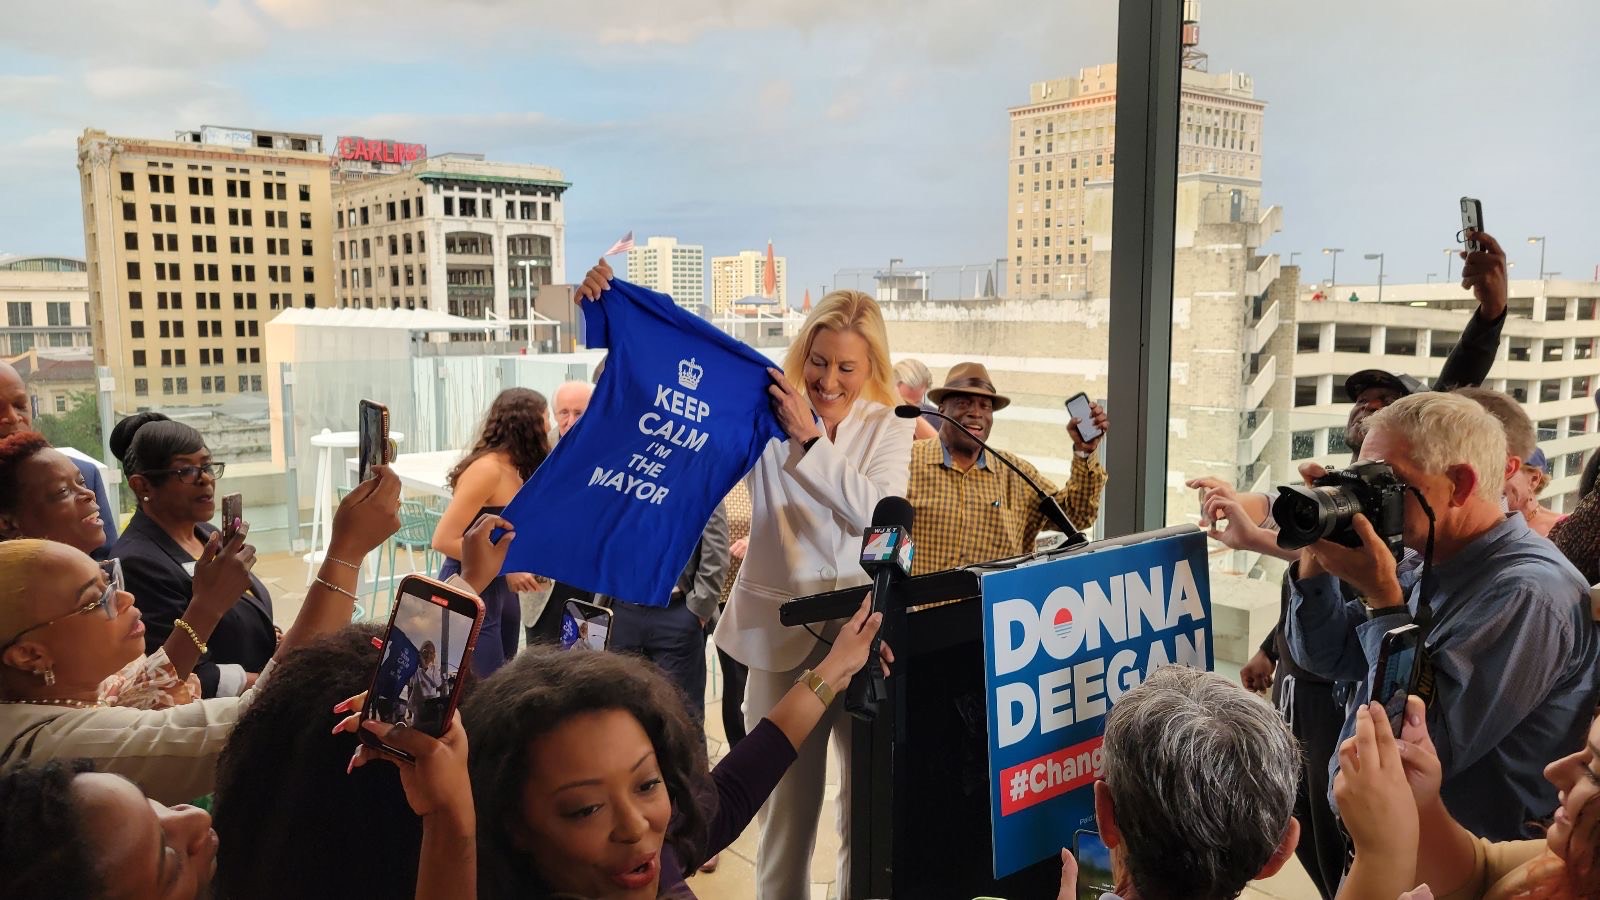 Featured image for “Donna Deegan tops Daniel Davis for Jacksonville mayor”